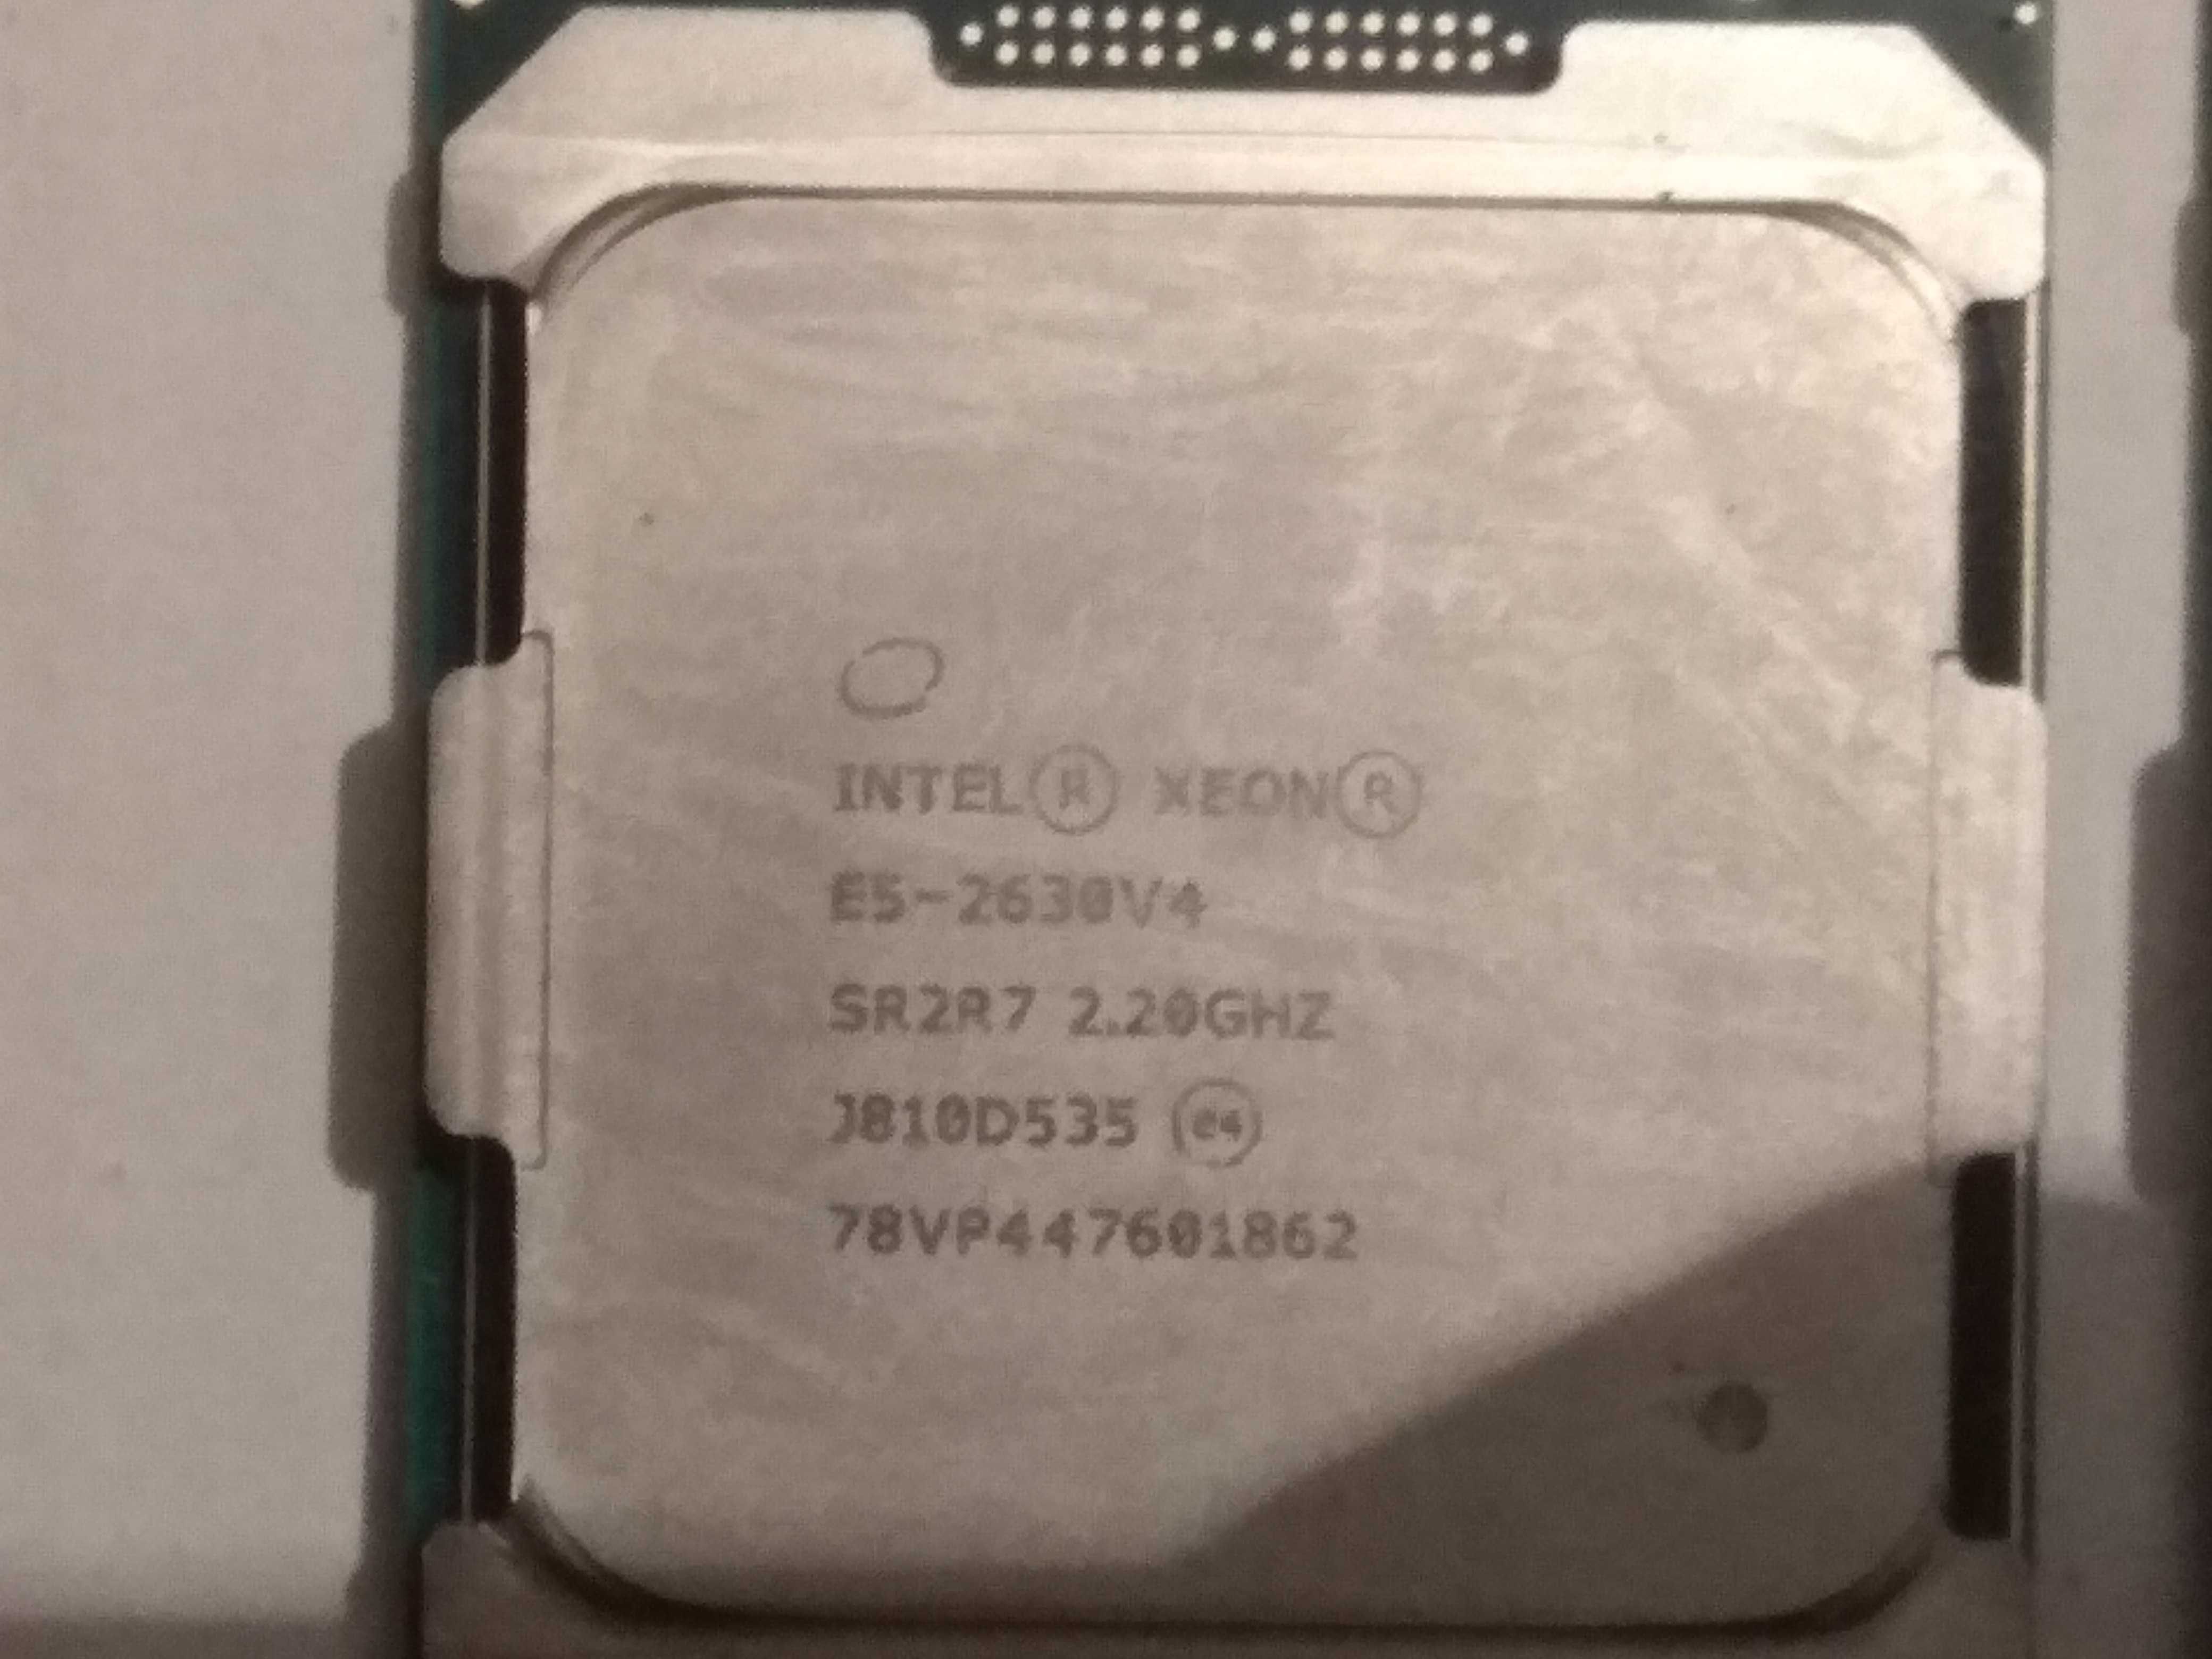 Продам два процессора Intel Xeon E5-2630V4. В идеале!